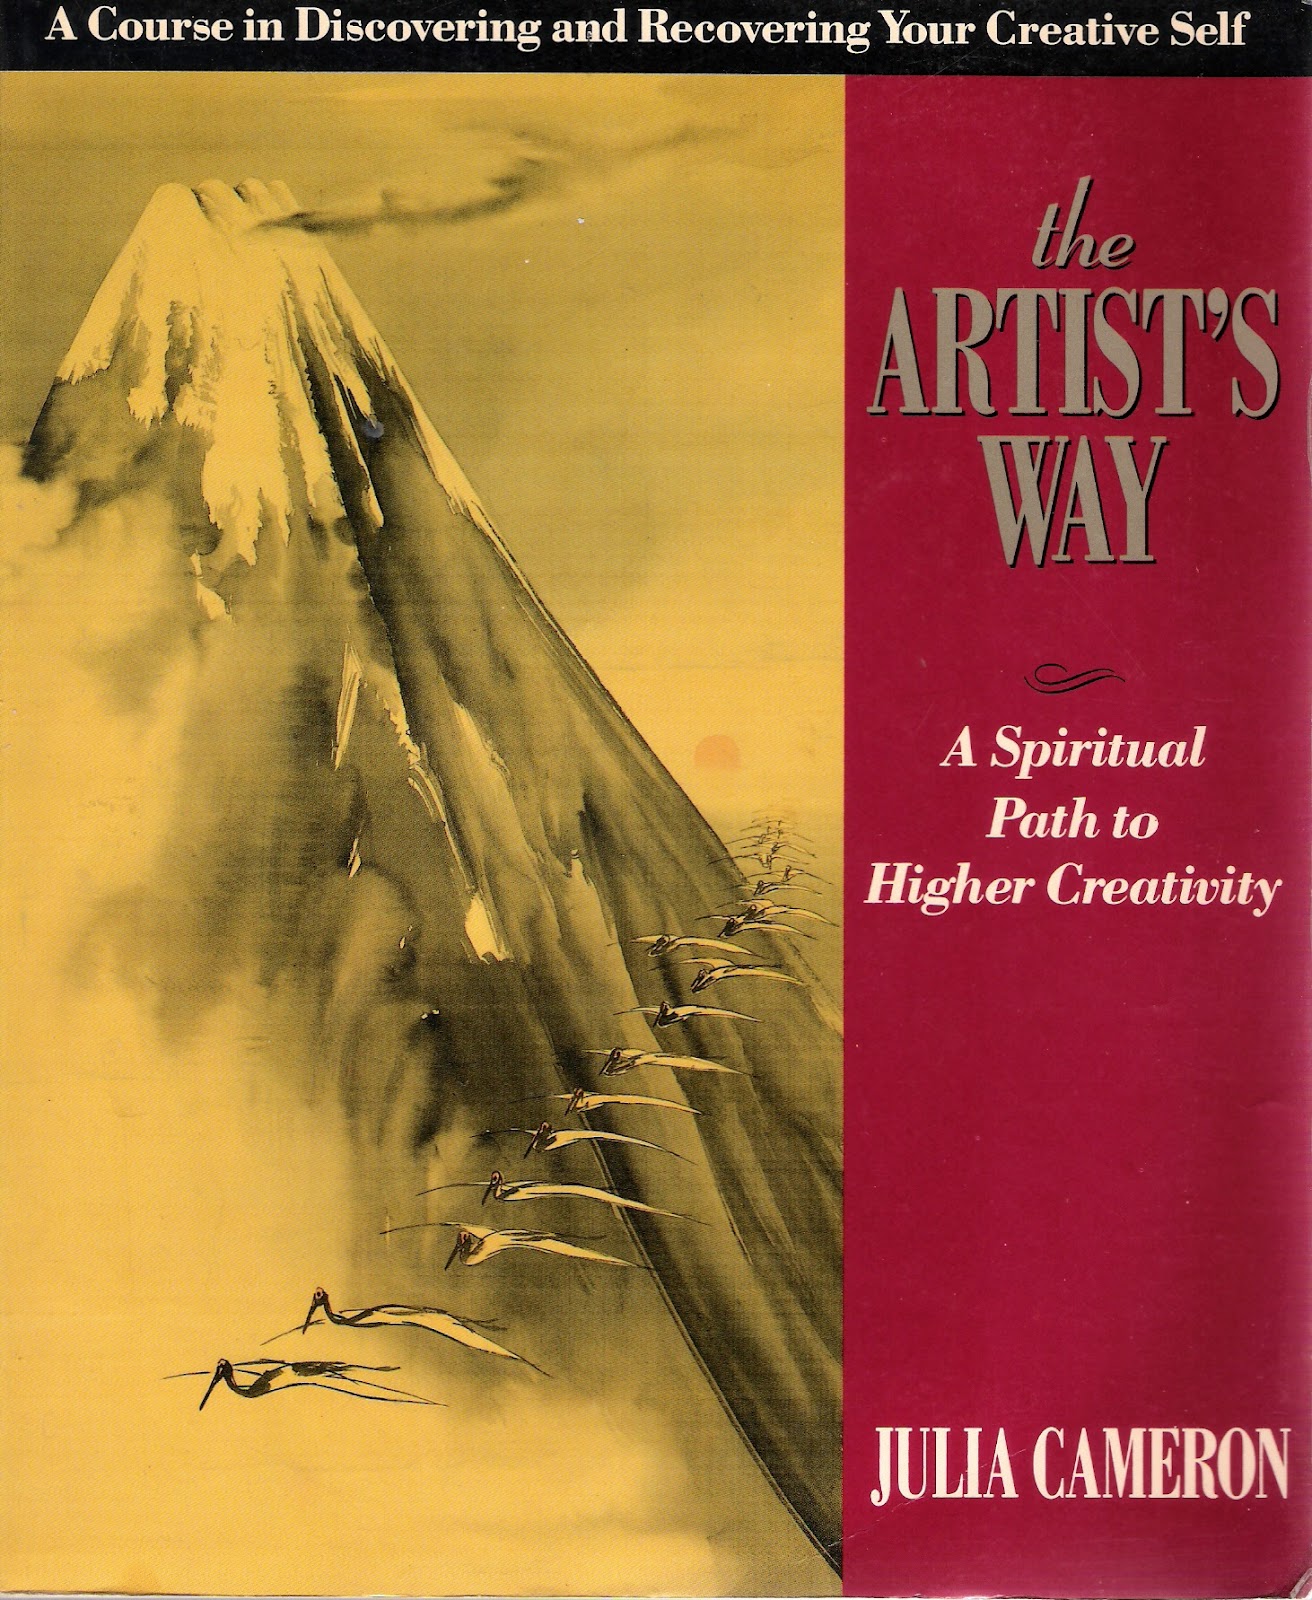 The artist's way (1998, Jeremy P Tarcher)